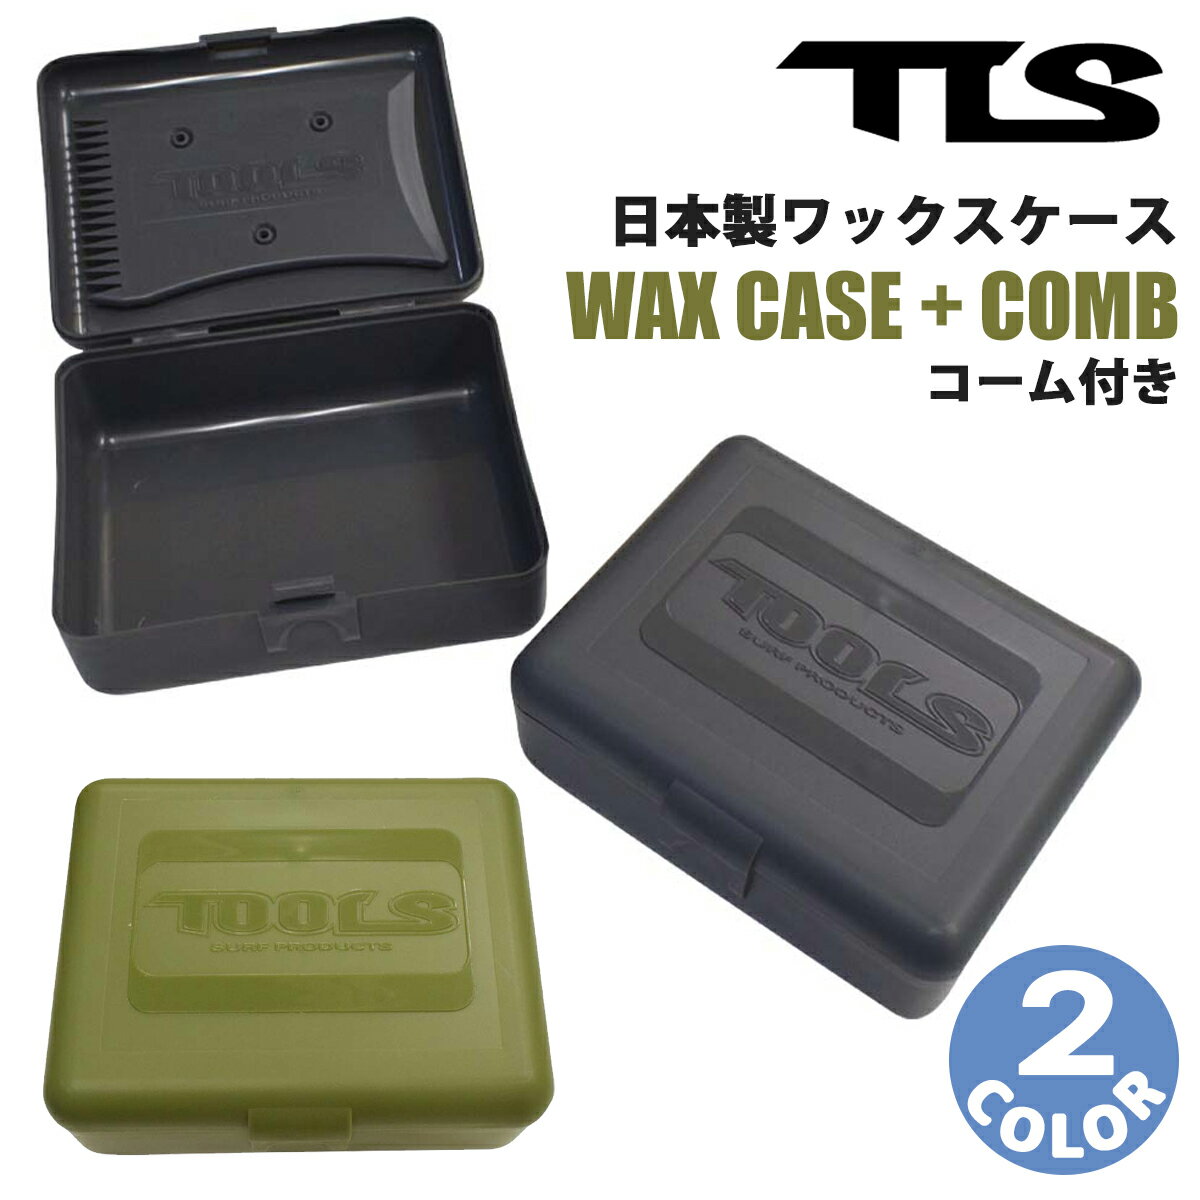 TLS TOOLS トゥールス ツールス TLS WAX CASE + COMB ワックス ケース ワックスケース 小物入れ コーム スクレーパー 収納 整理 整頓 保管 プラスチック容器 サーフィン グッズ サーフボード ワックス1個収納可能 アクセサリー入れ 日本製 日本正規品